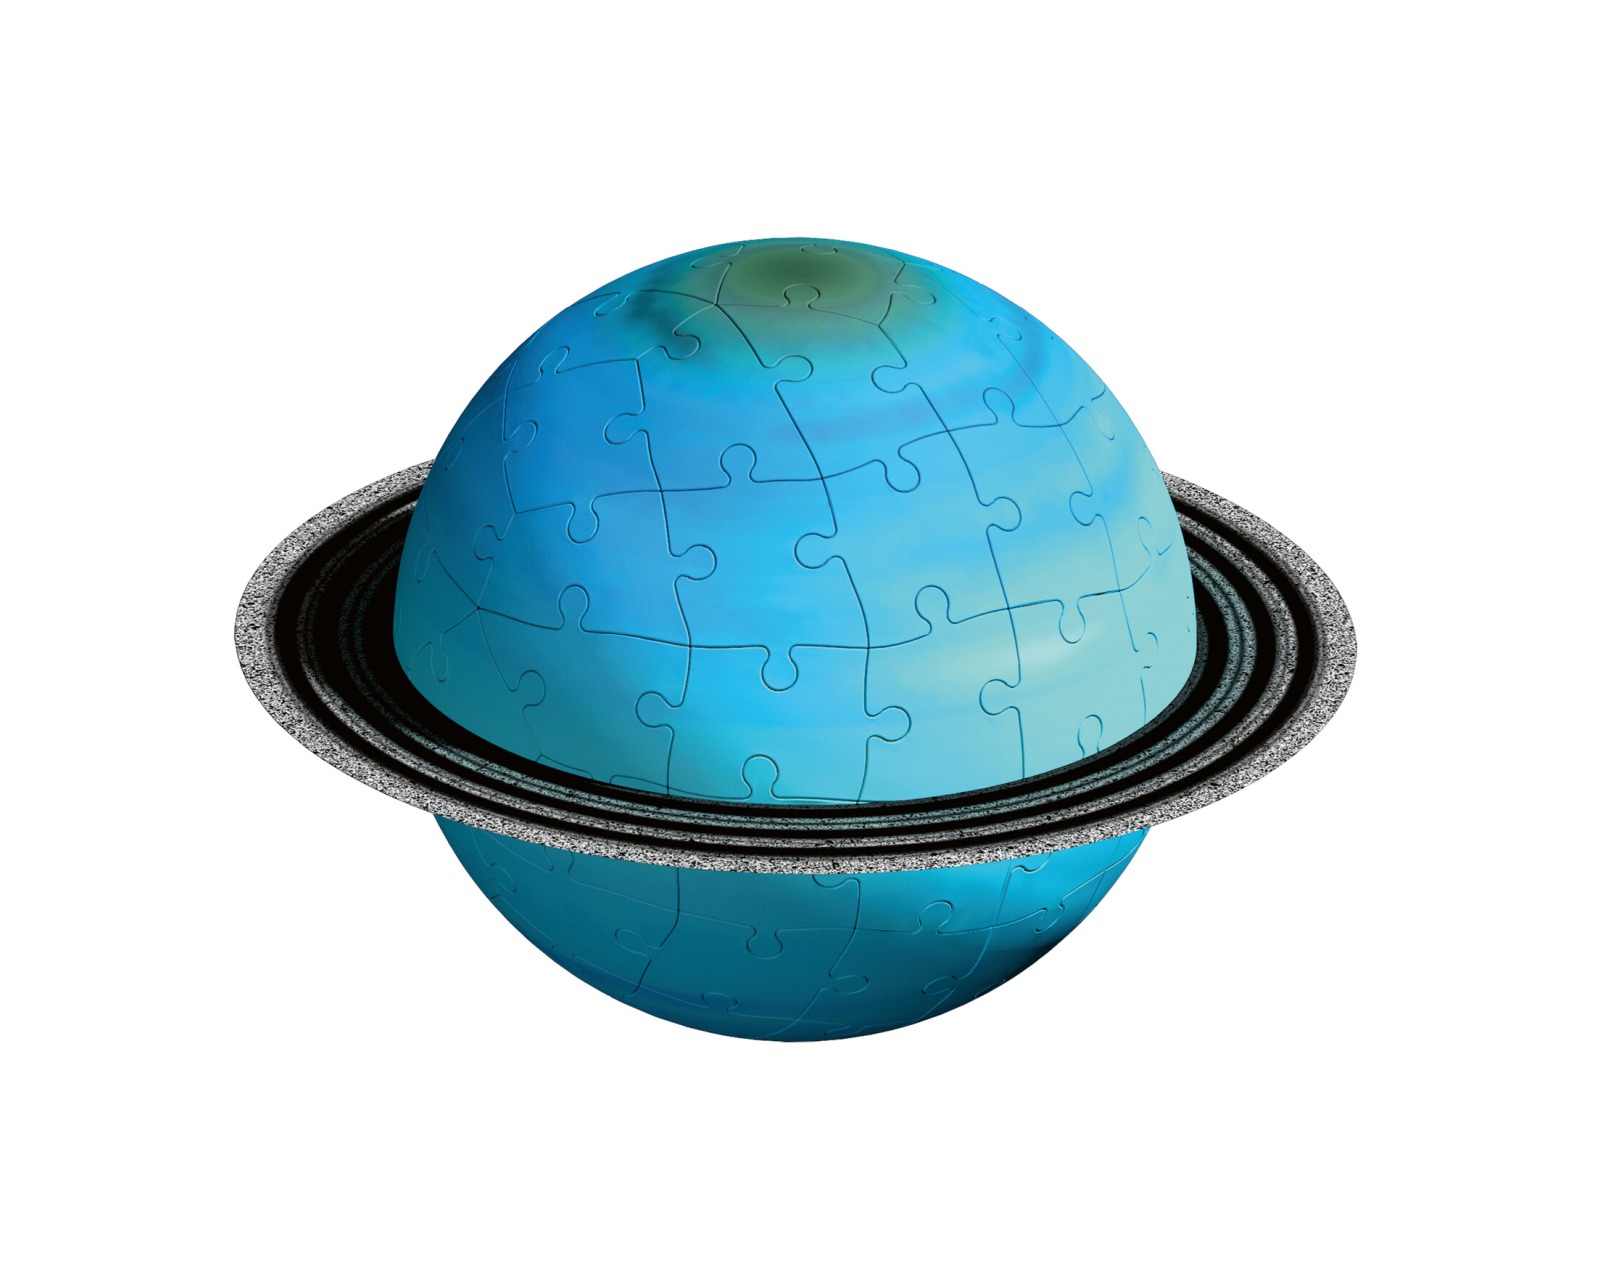 Ravensburger - 3d puzzle il sistema planetario, 540 pezzi, 6+ anni - RAVENSBURGER 3D PUZZLE